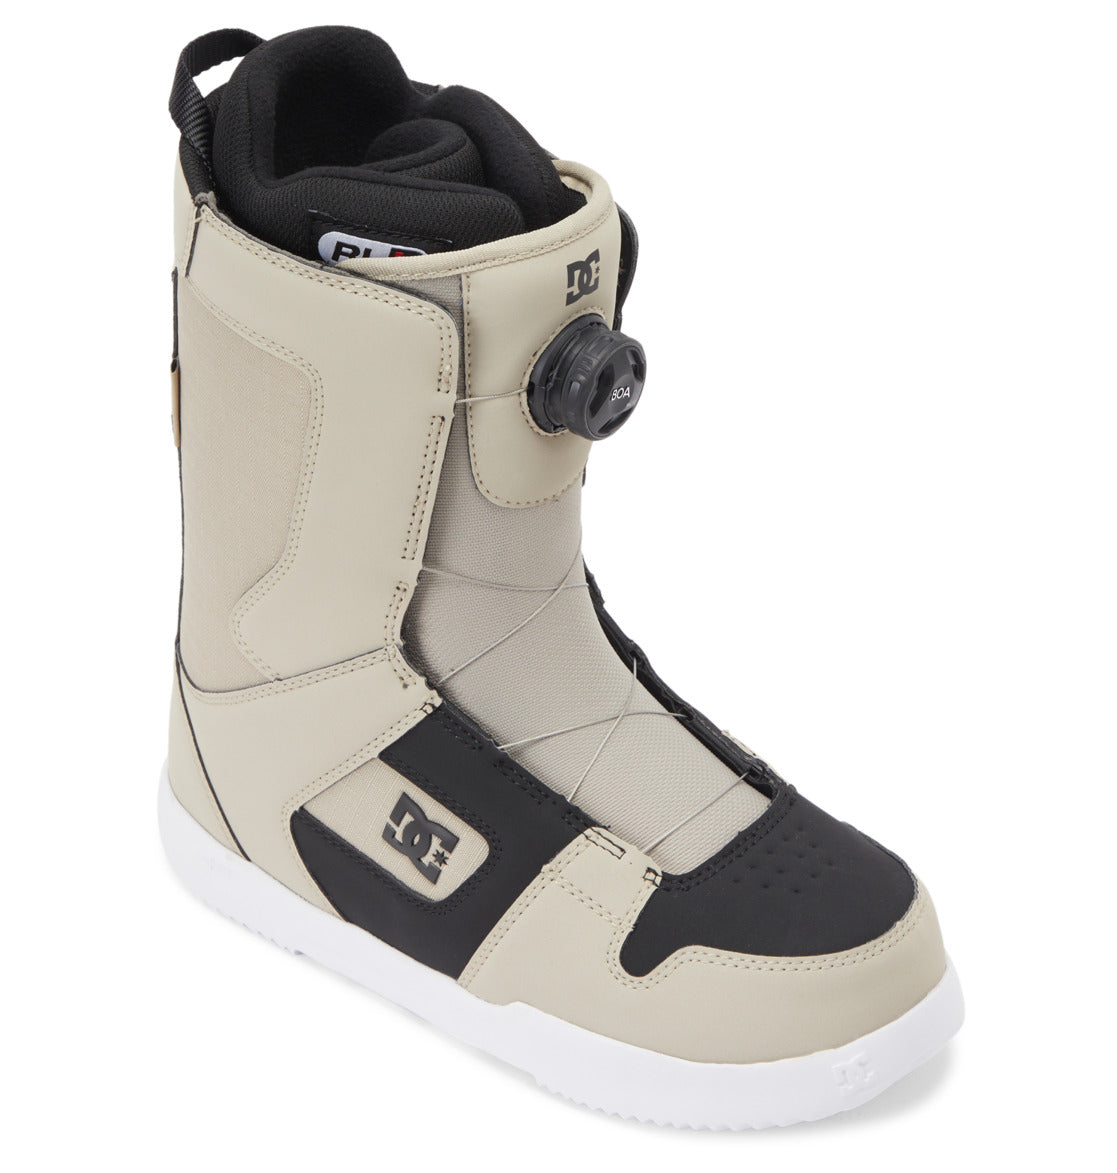 Men's Phase BOA® Snowboard Boots